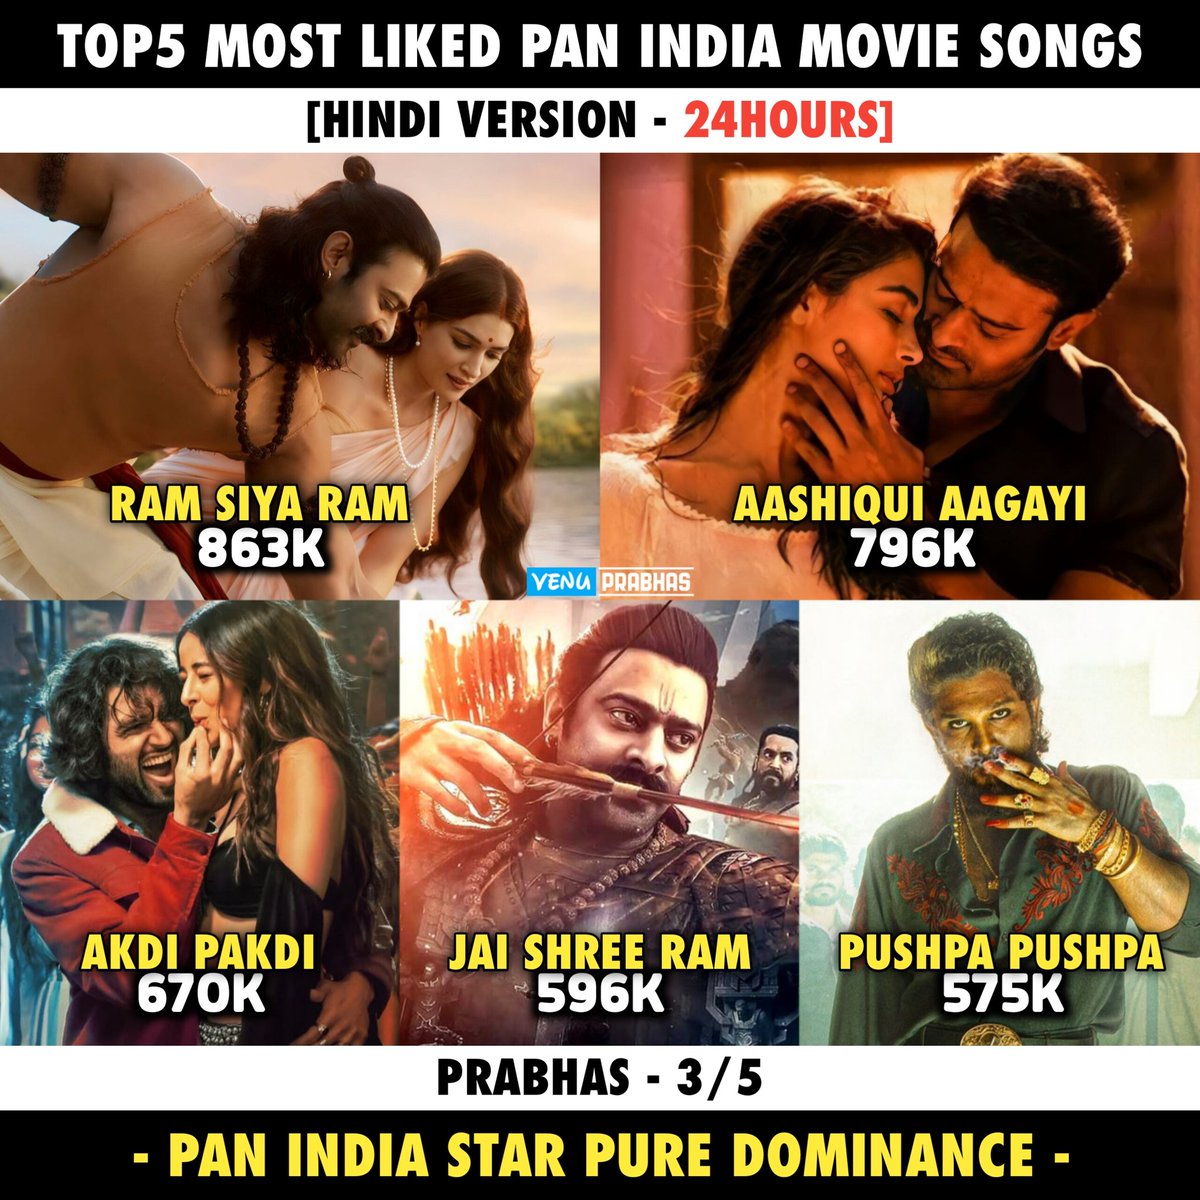 Top5 Most Liked Pan India Movie Songs : 1. Ram Siya Ram - 863K 👑 2. Aashiqui Aagayi - 796K ❤️ 3. Liger - 670K 4. #Adipurush - 596K 💥 5. #PushpaPushpa - 575K #Prabhas Dominance 🔥🔥🔥